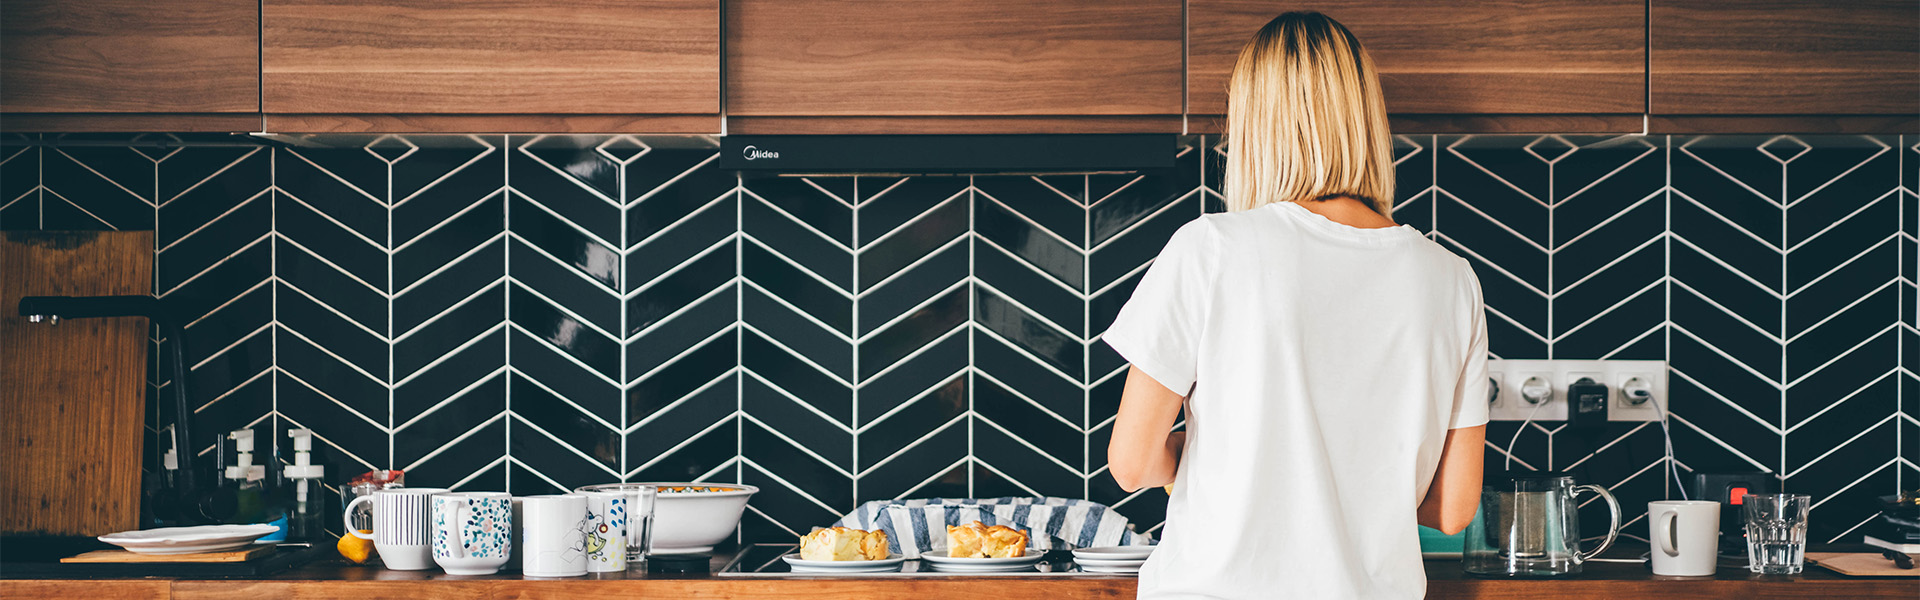 Woman making herself breakfast in her modern home kitchen